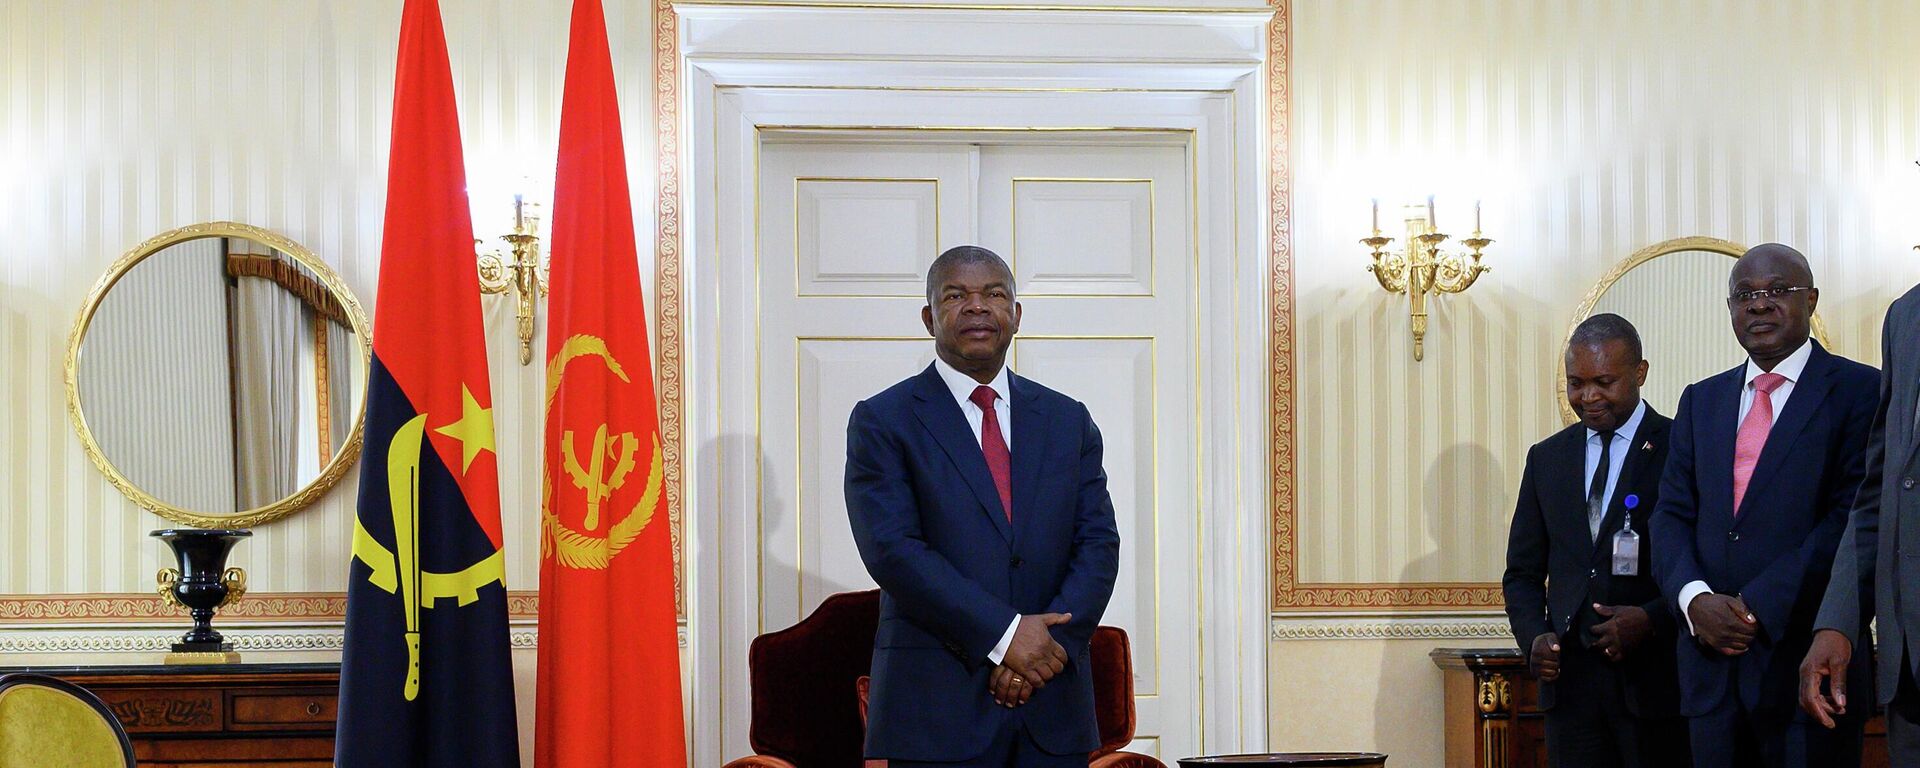 Angola President, Joao Lourenco waits to welcome US Secretary of State, Mike Pompeo at the Presidential Palace in Luanda, Angola, Monday Feb. 17, 2020. - Sputnik International, 1920, 05.07.2022